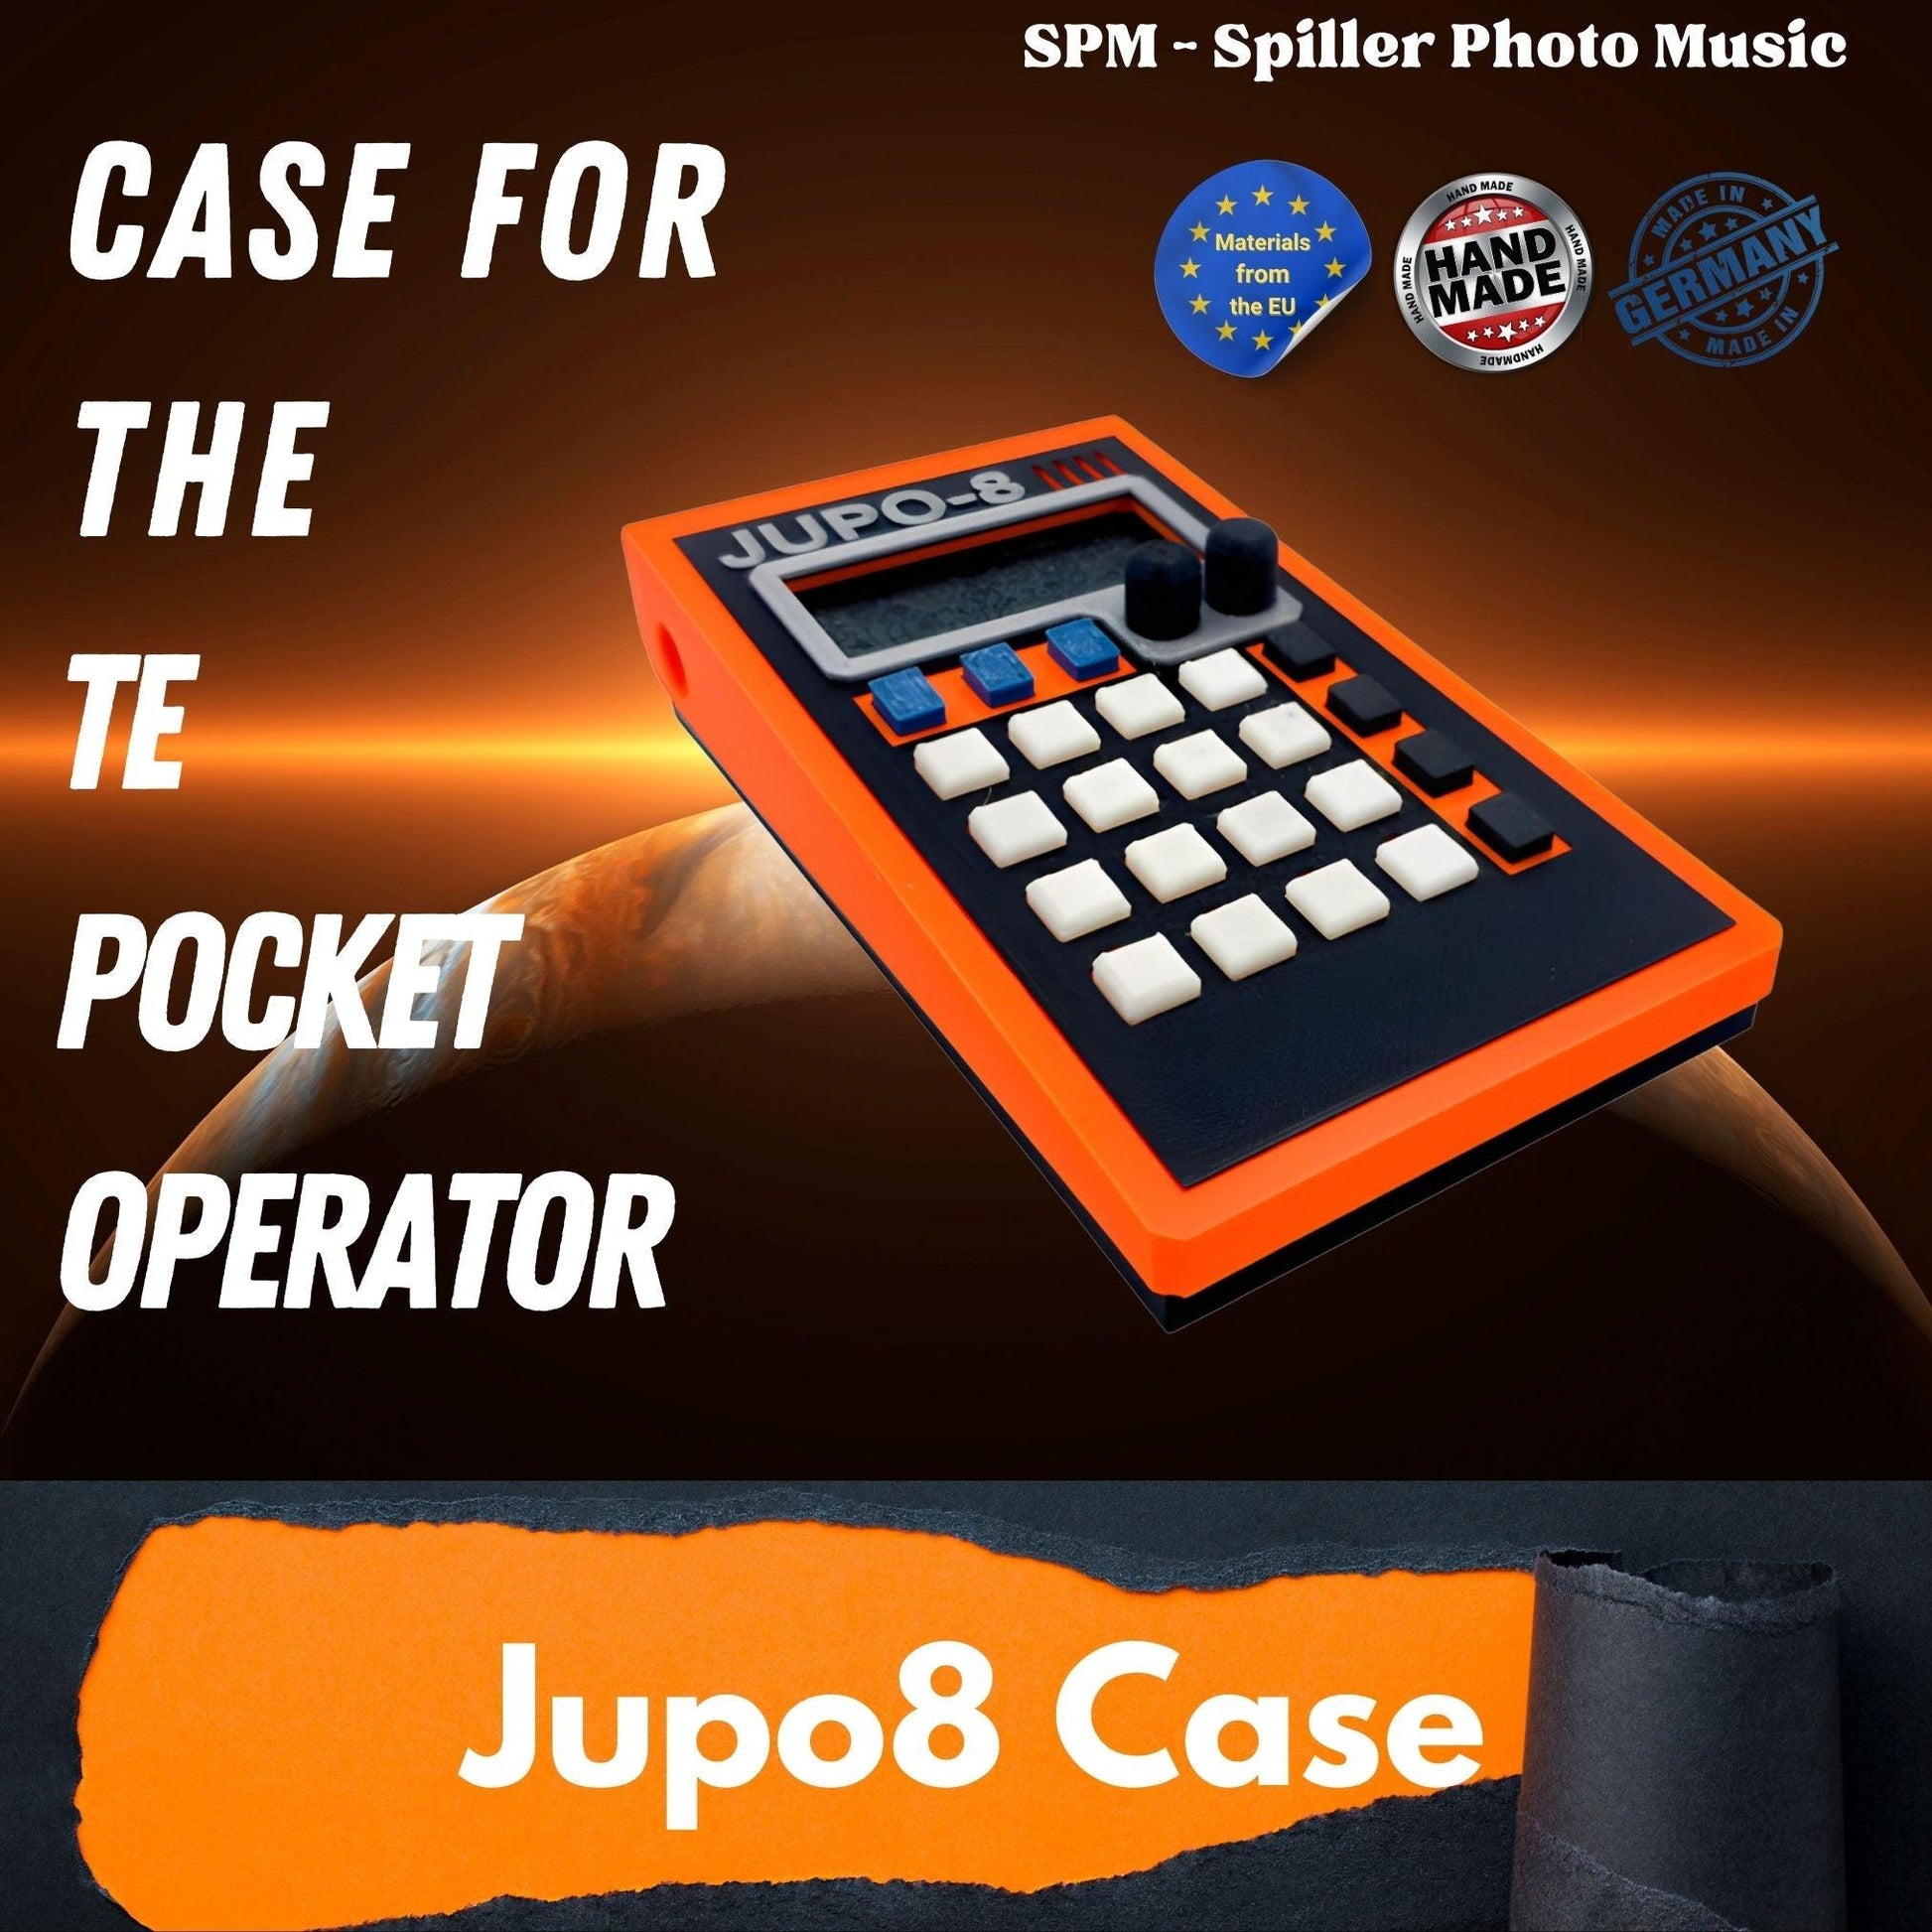 JUPO-8 PO Case